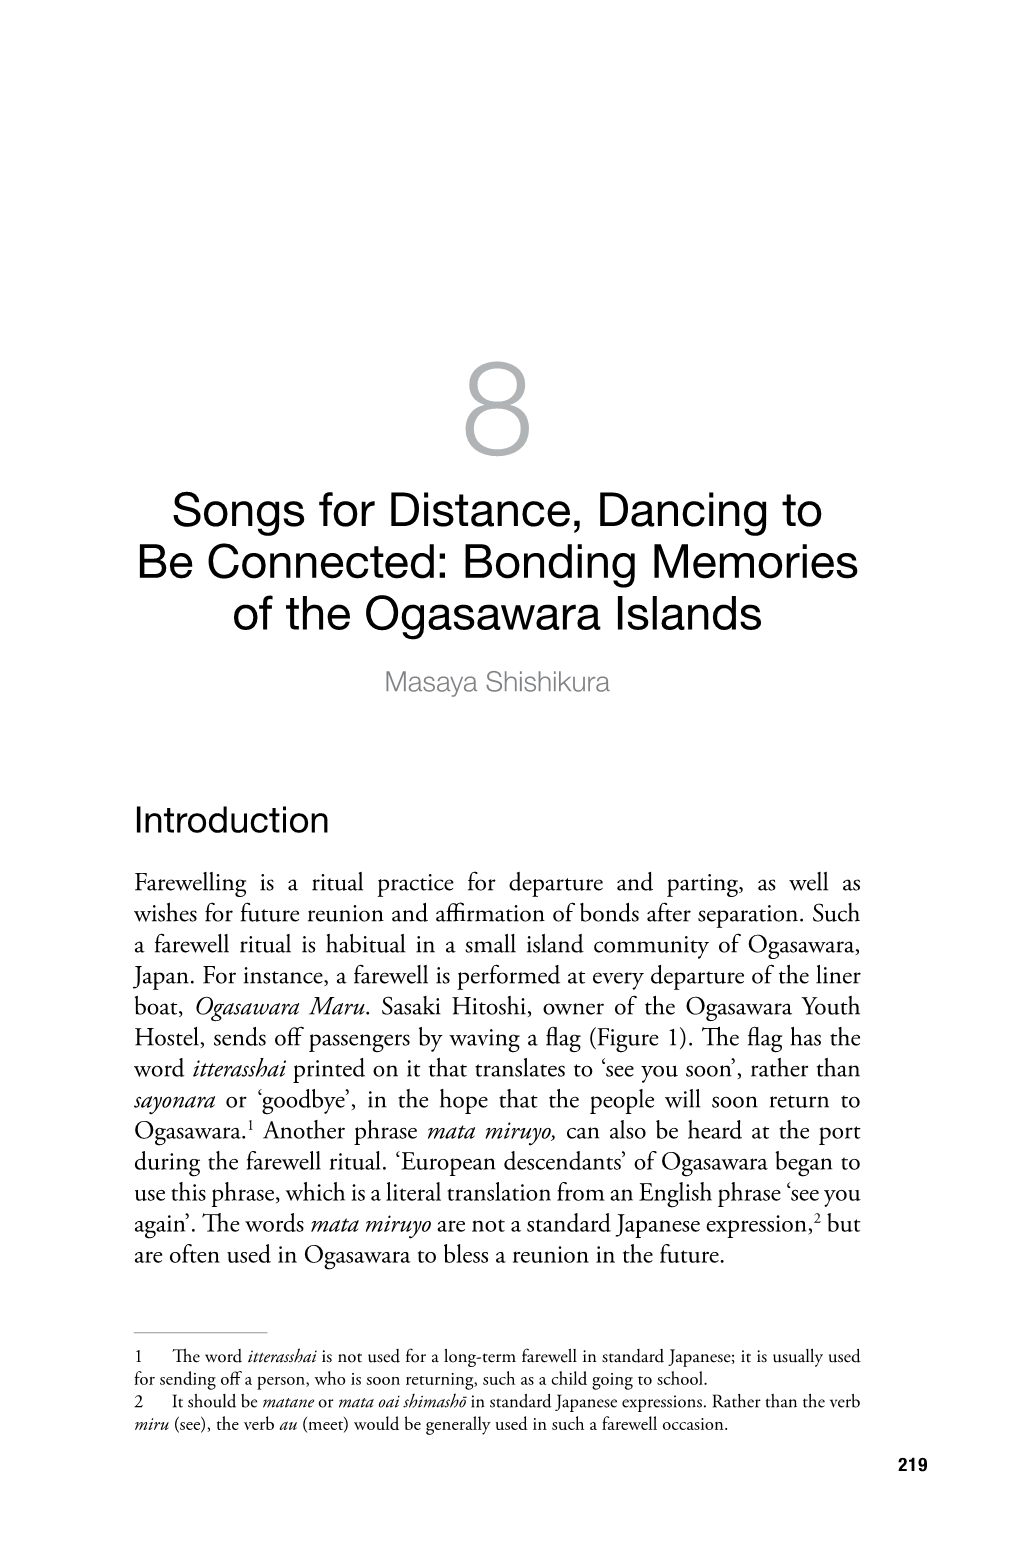 Bonding Memories of the Ogasawara Islands Masaya Shishikura